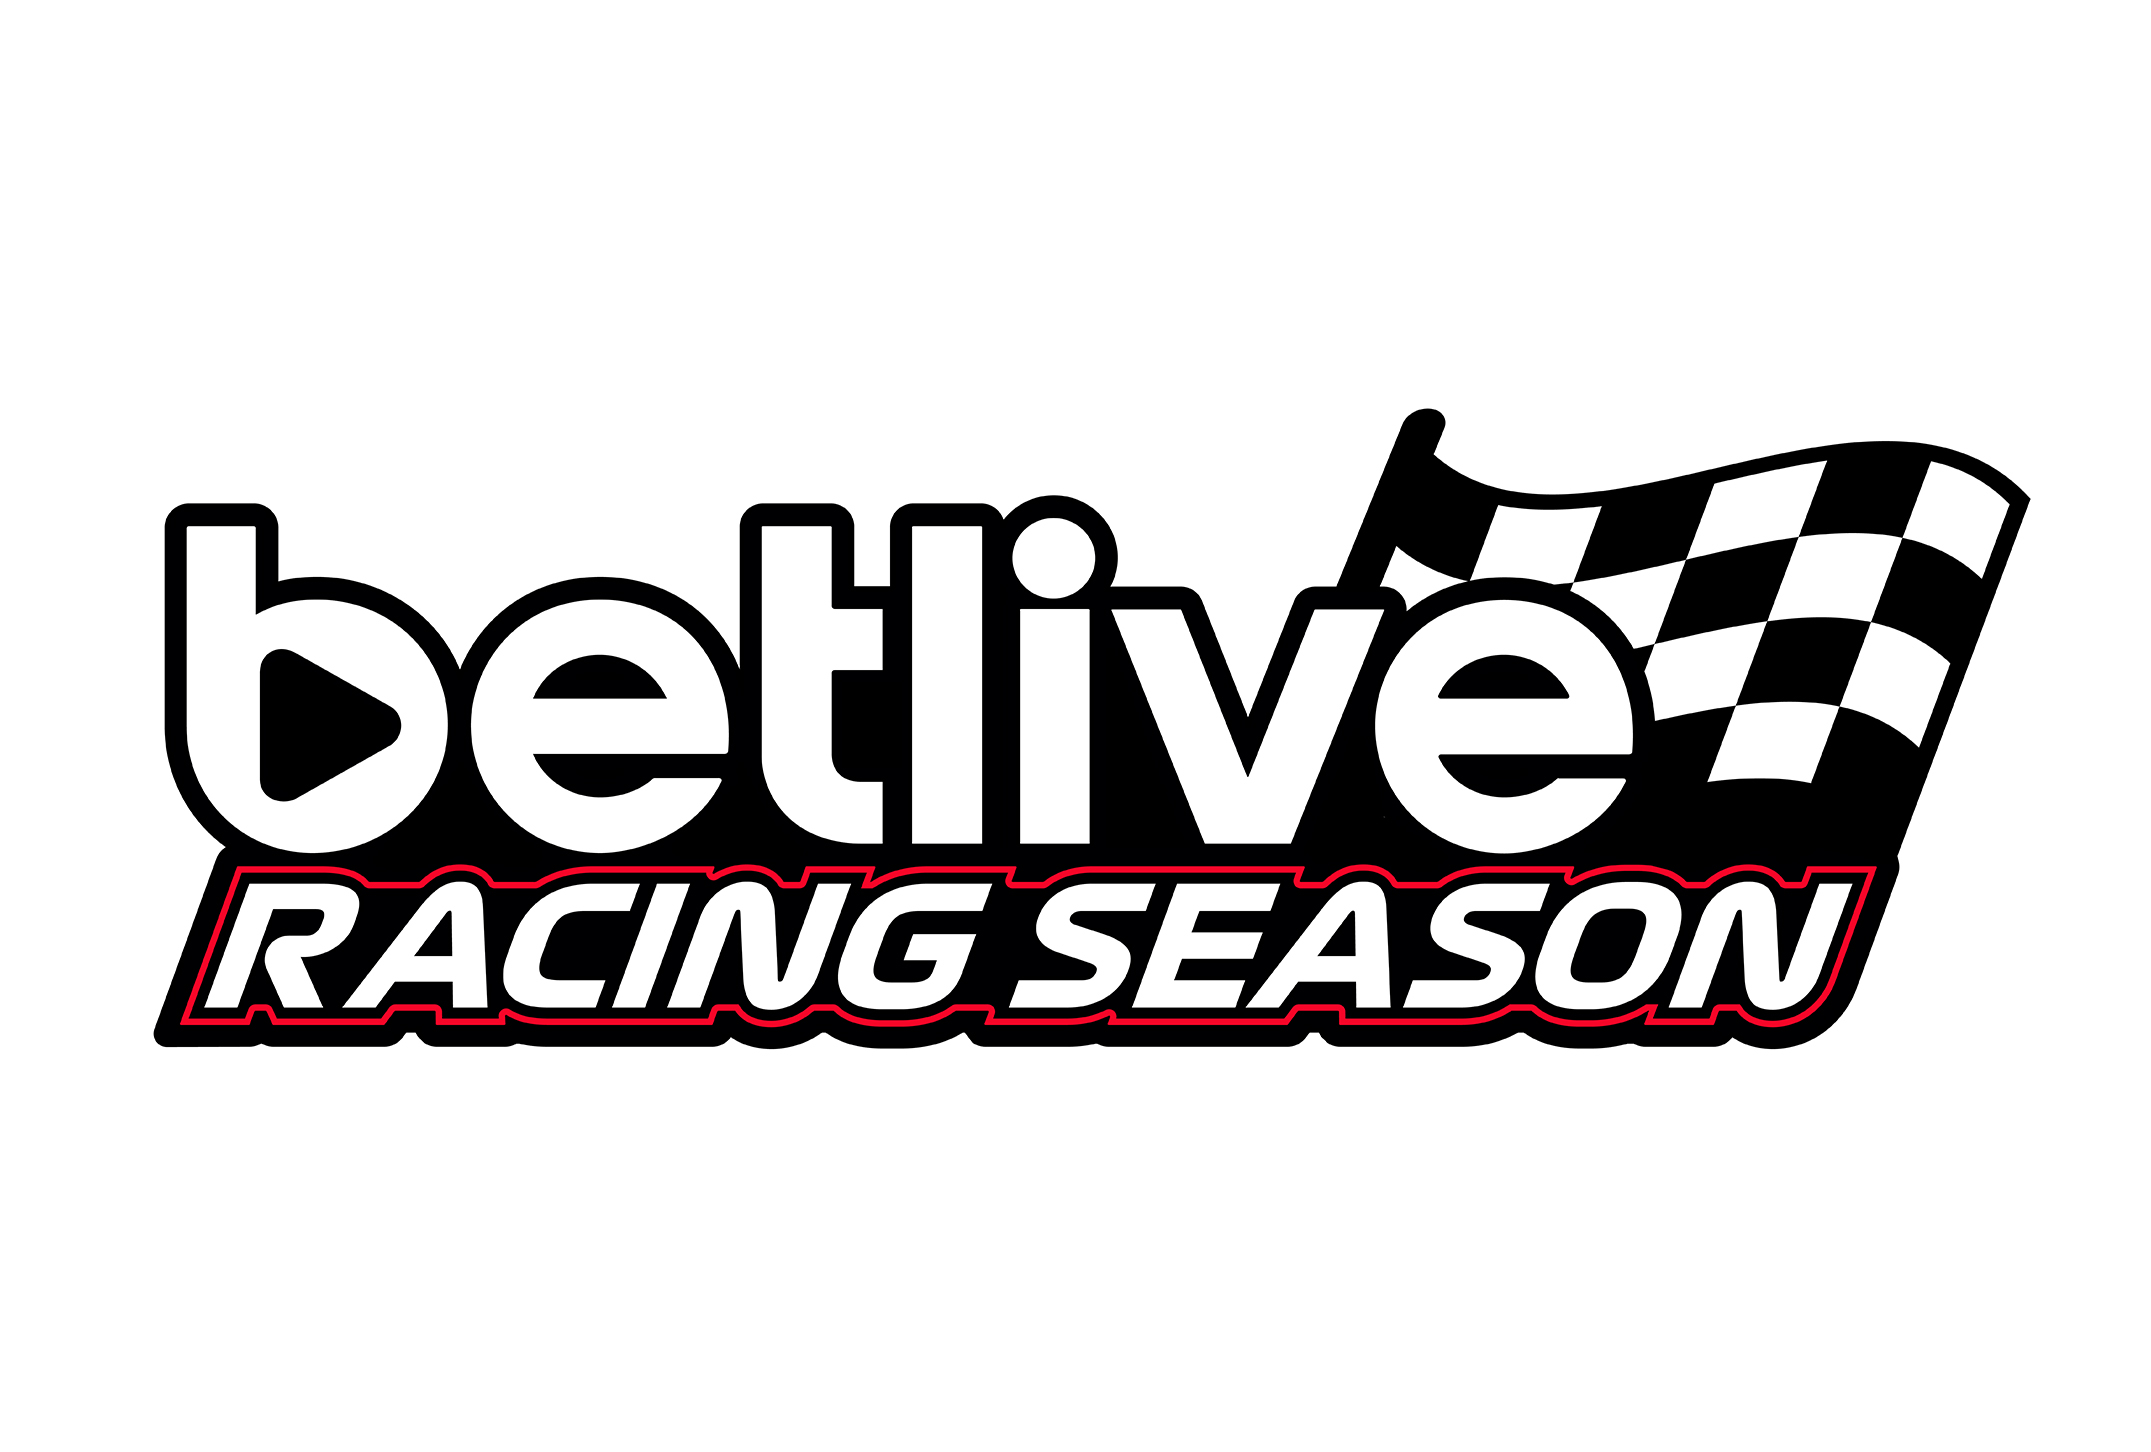 Betlive Racing Season